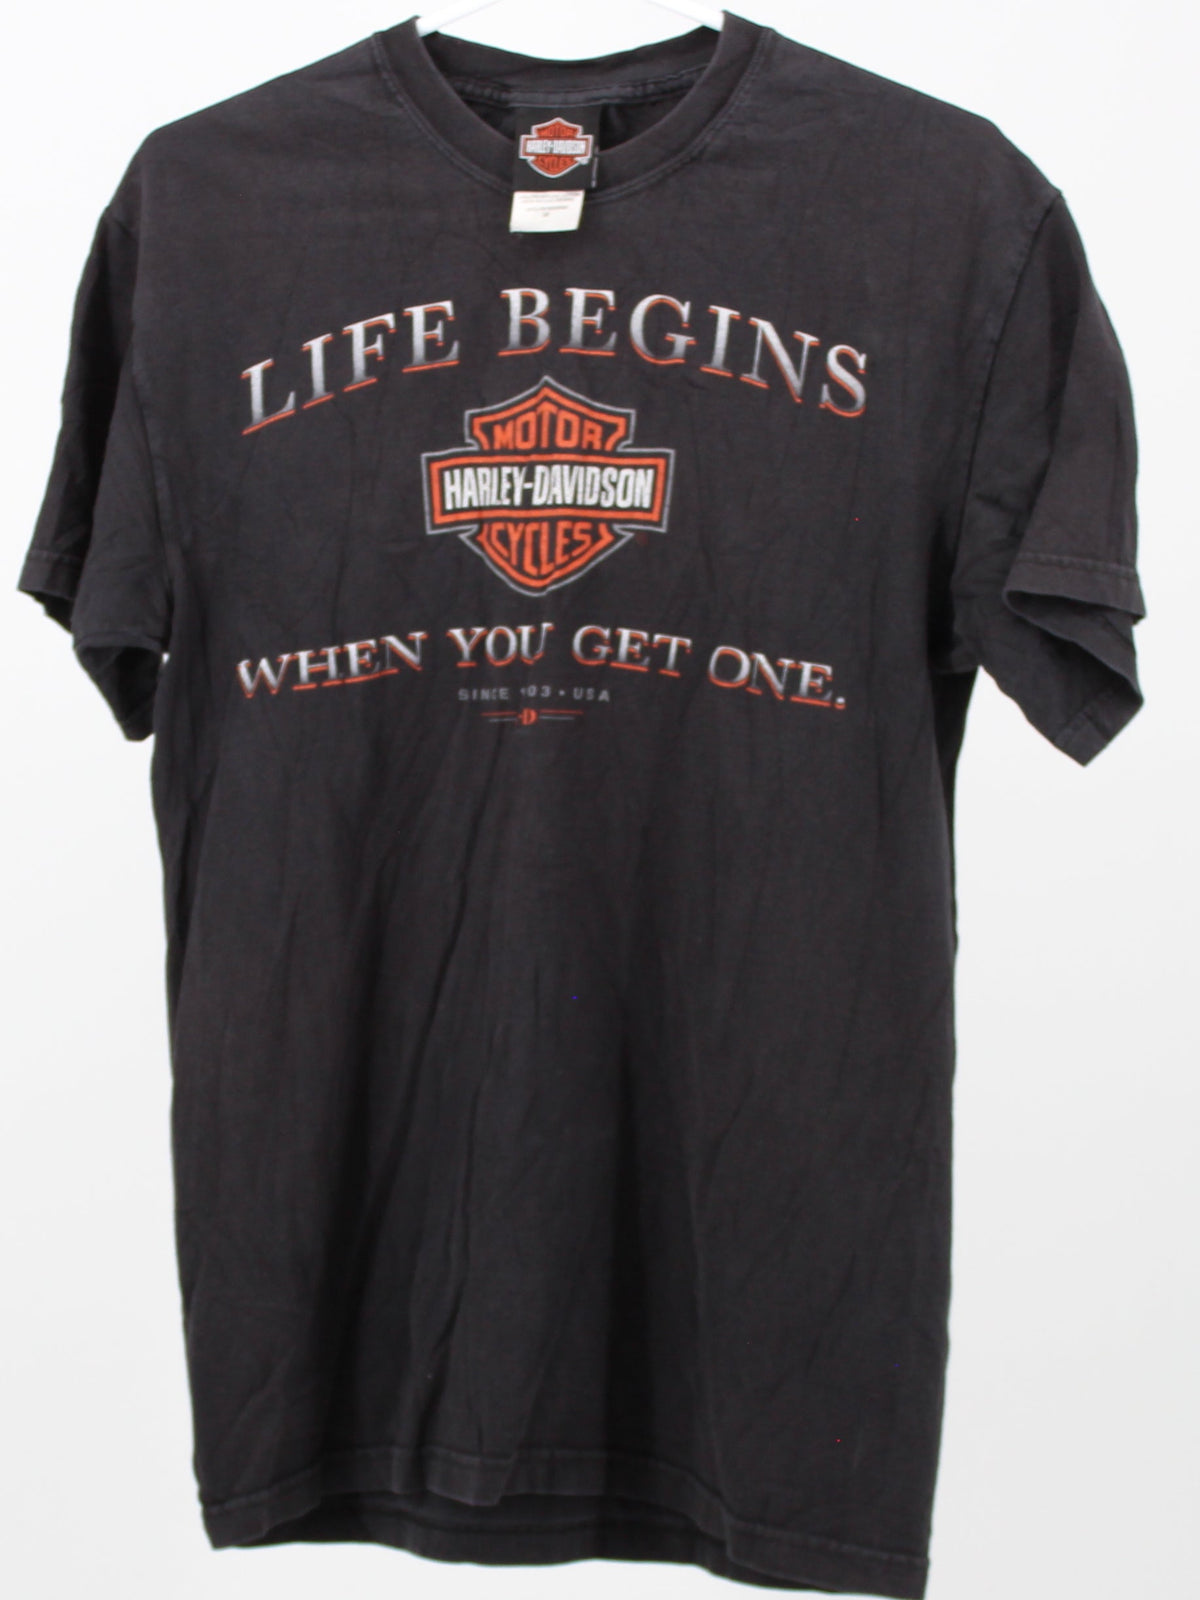 Harley Davidson "Life begins when you get one"